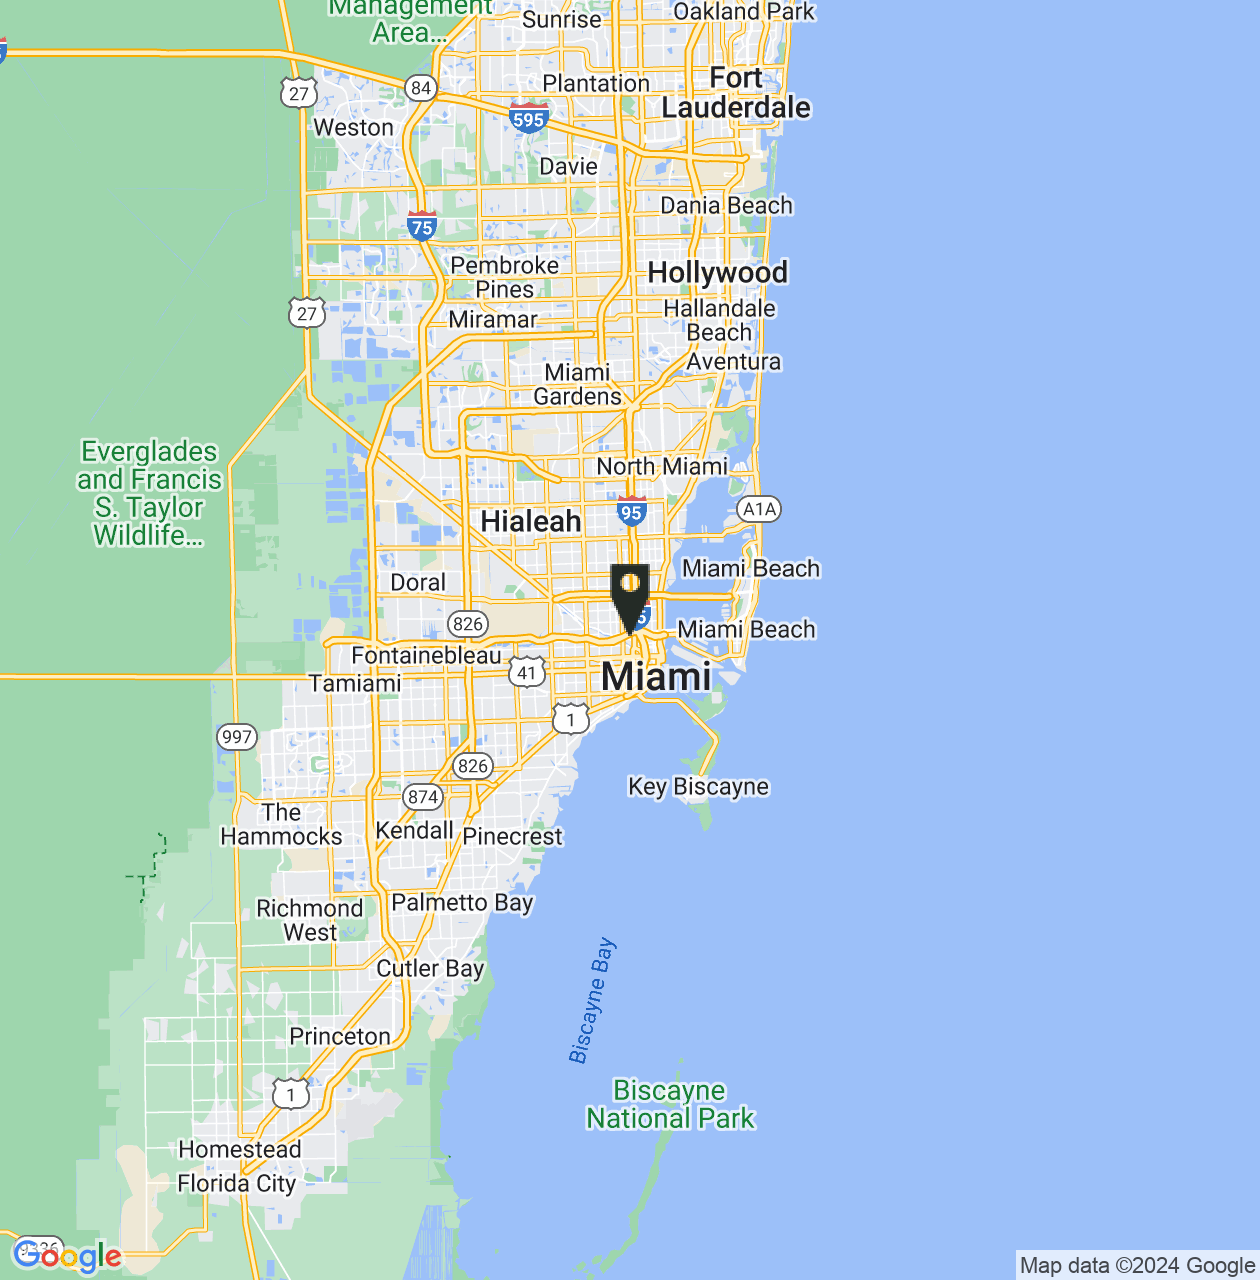 Map showing Miami-Dade County, Florida